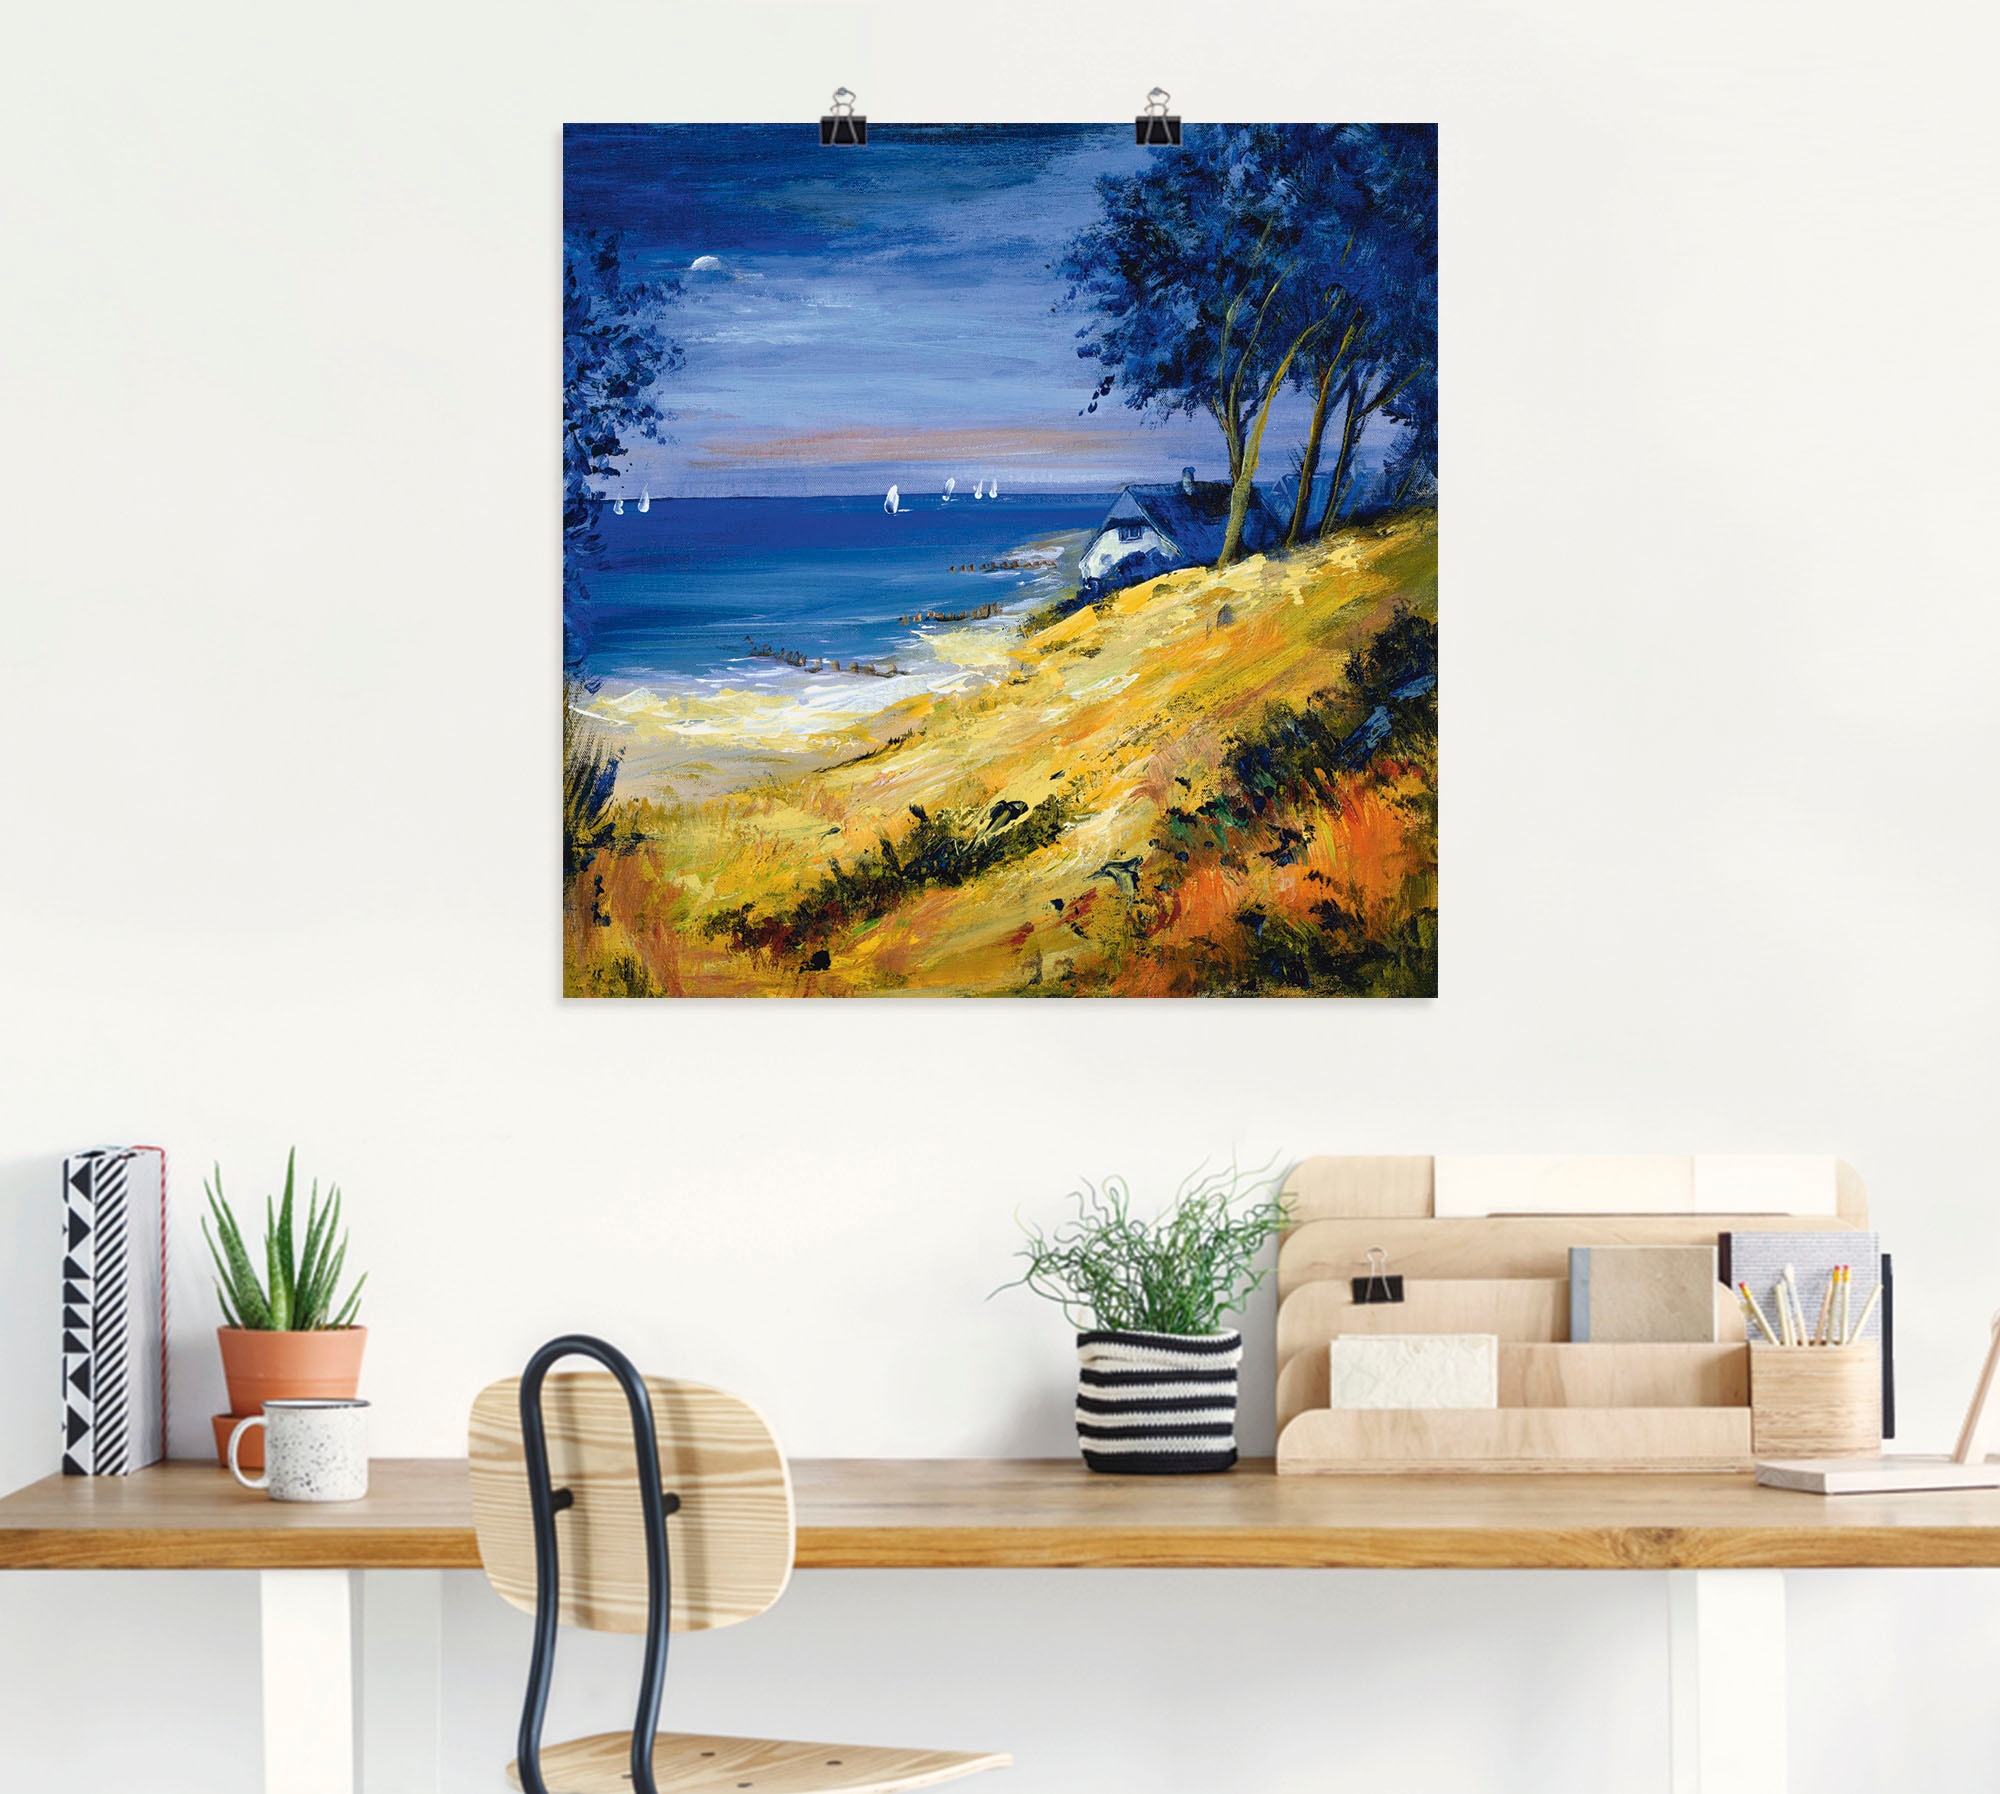 Artland Wandbild »Das Meer zu Hause«, Gewässer, (1 St.), als Leinwandbild, Poster in verschied. Größen